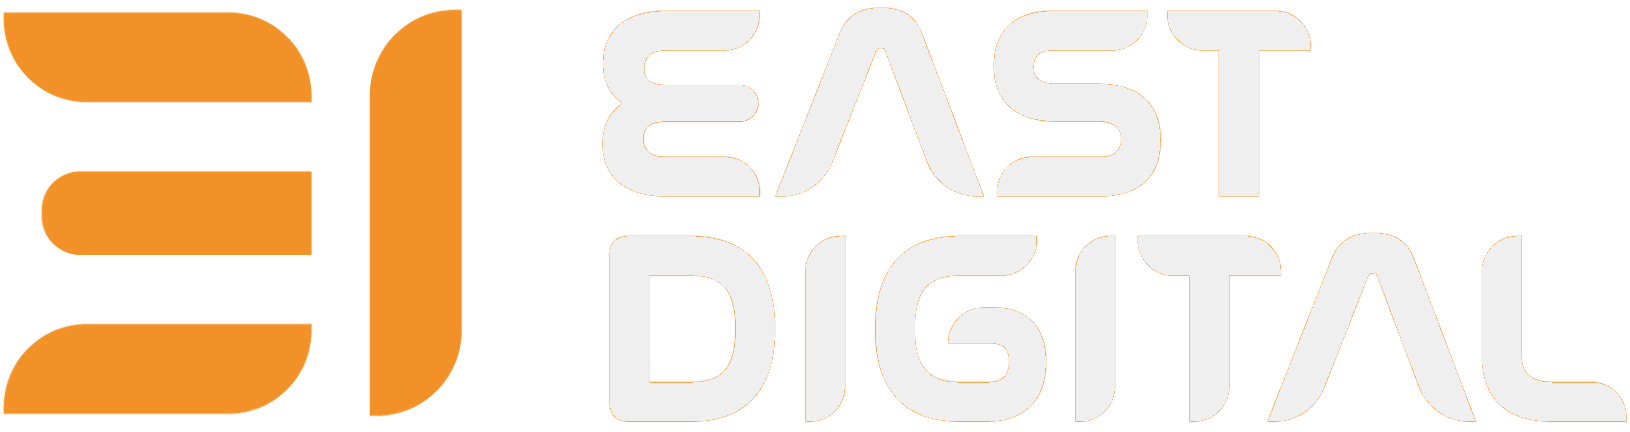 31 East Digital Logo